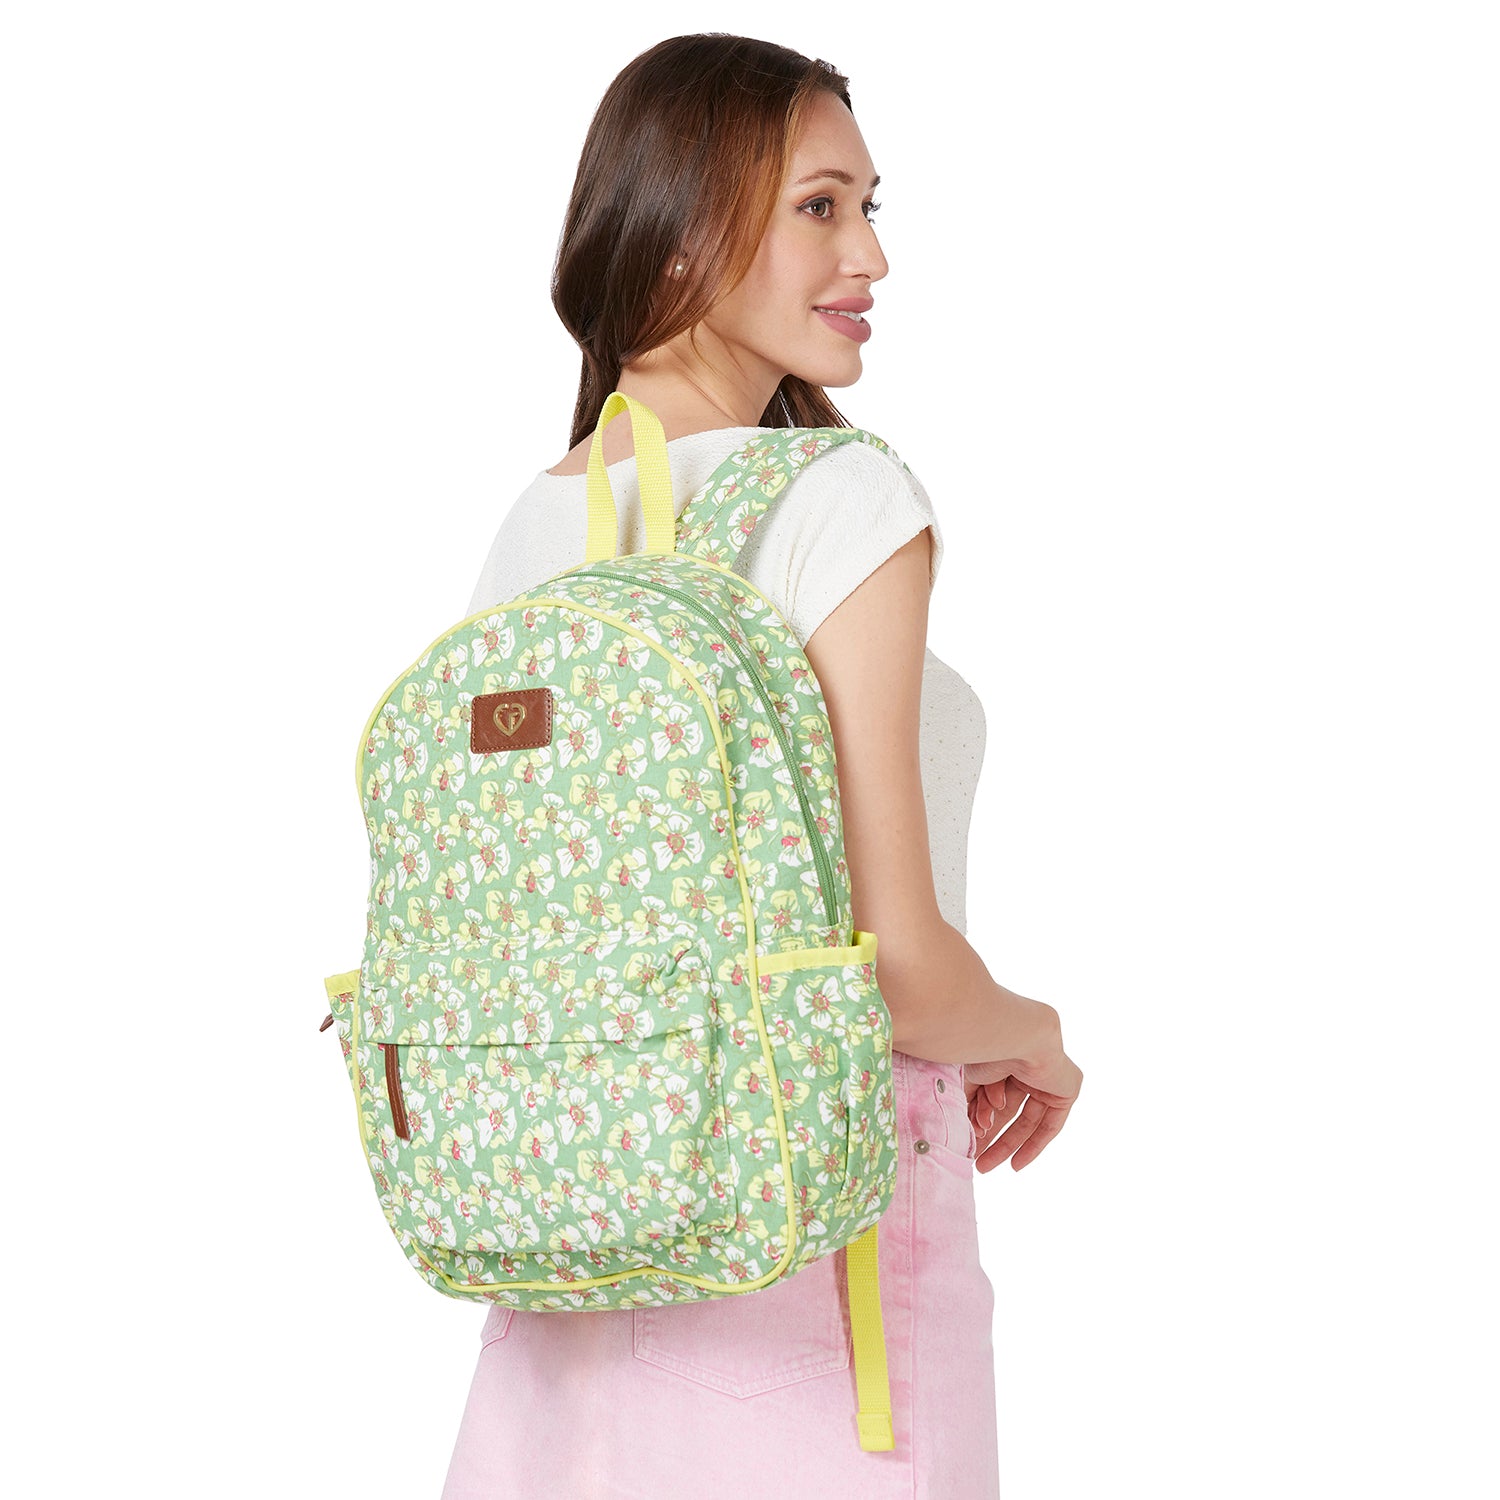 Caprese Blossom Laptop Backpack Large